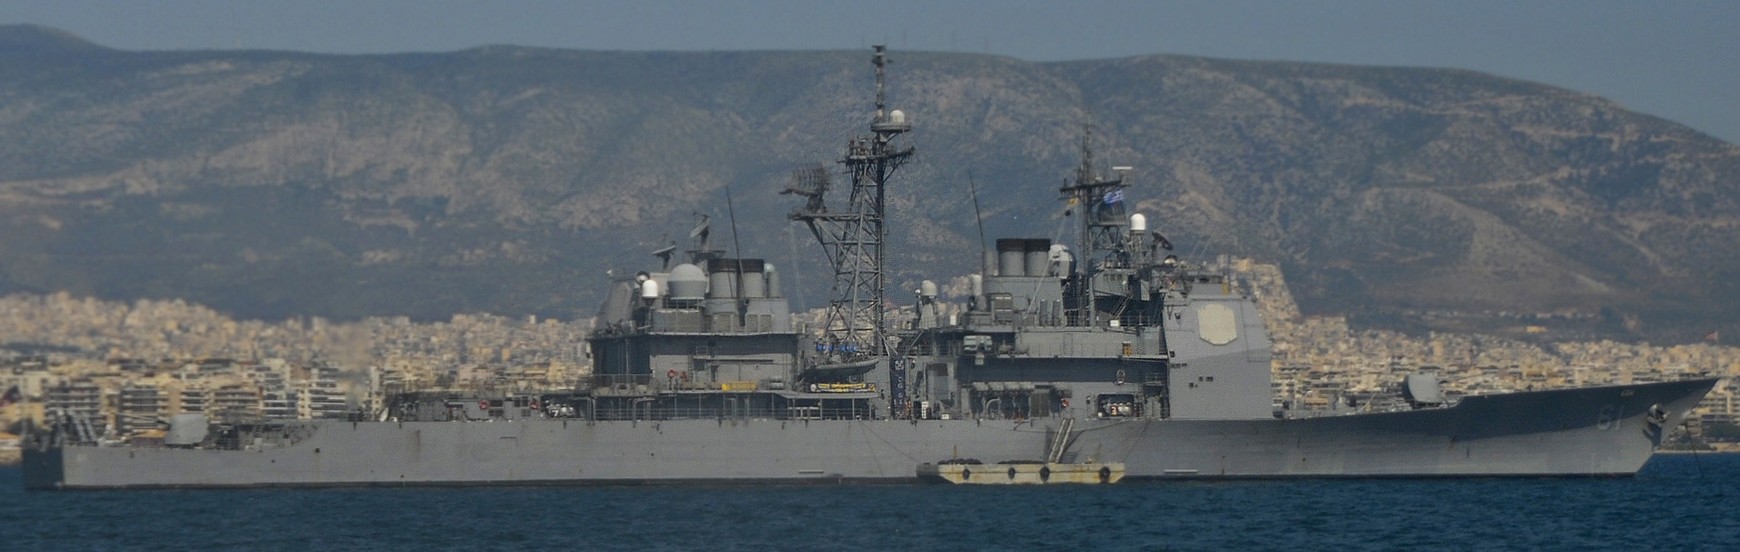 cg-61 uss monterey ticonderoga class guided missile cruiser aegis us navy piraeus greece 36